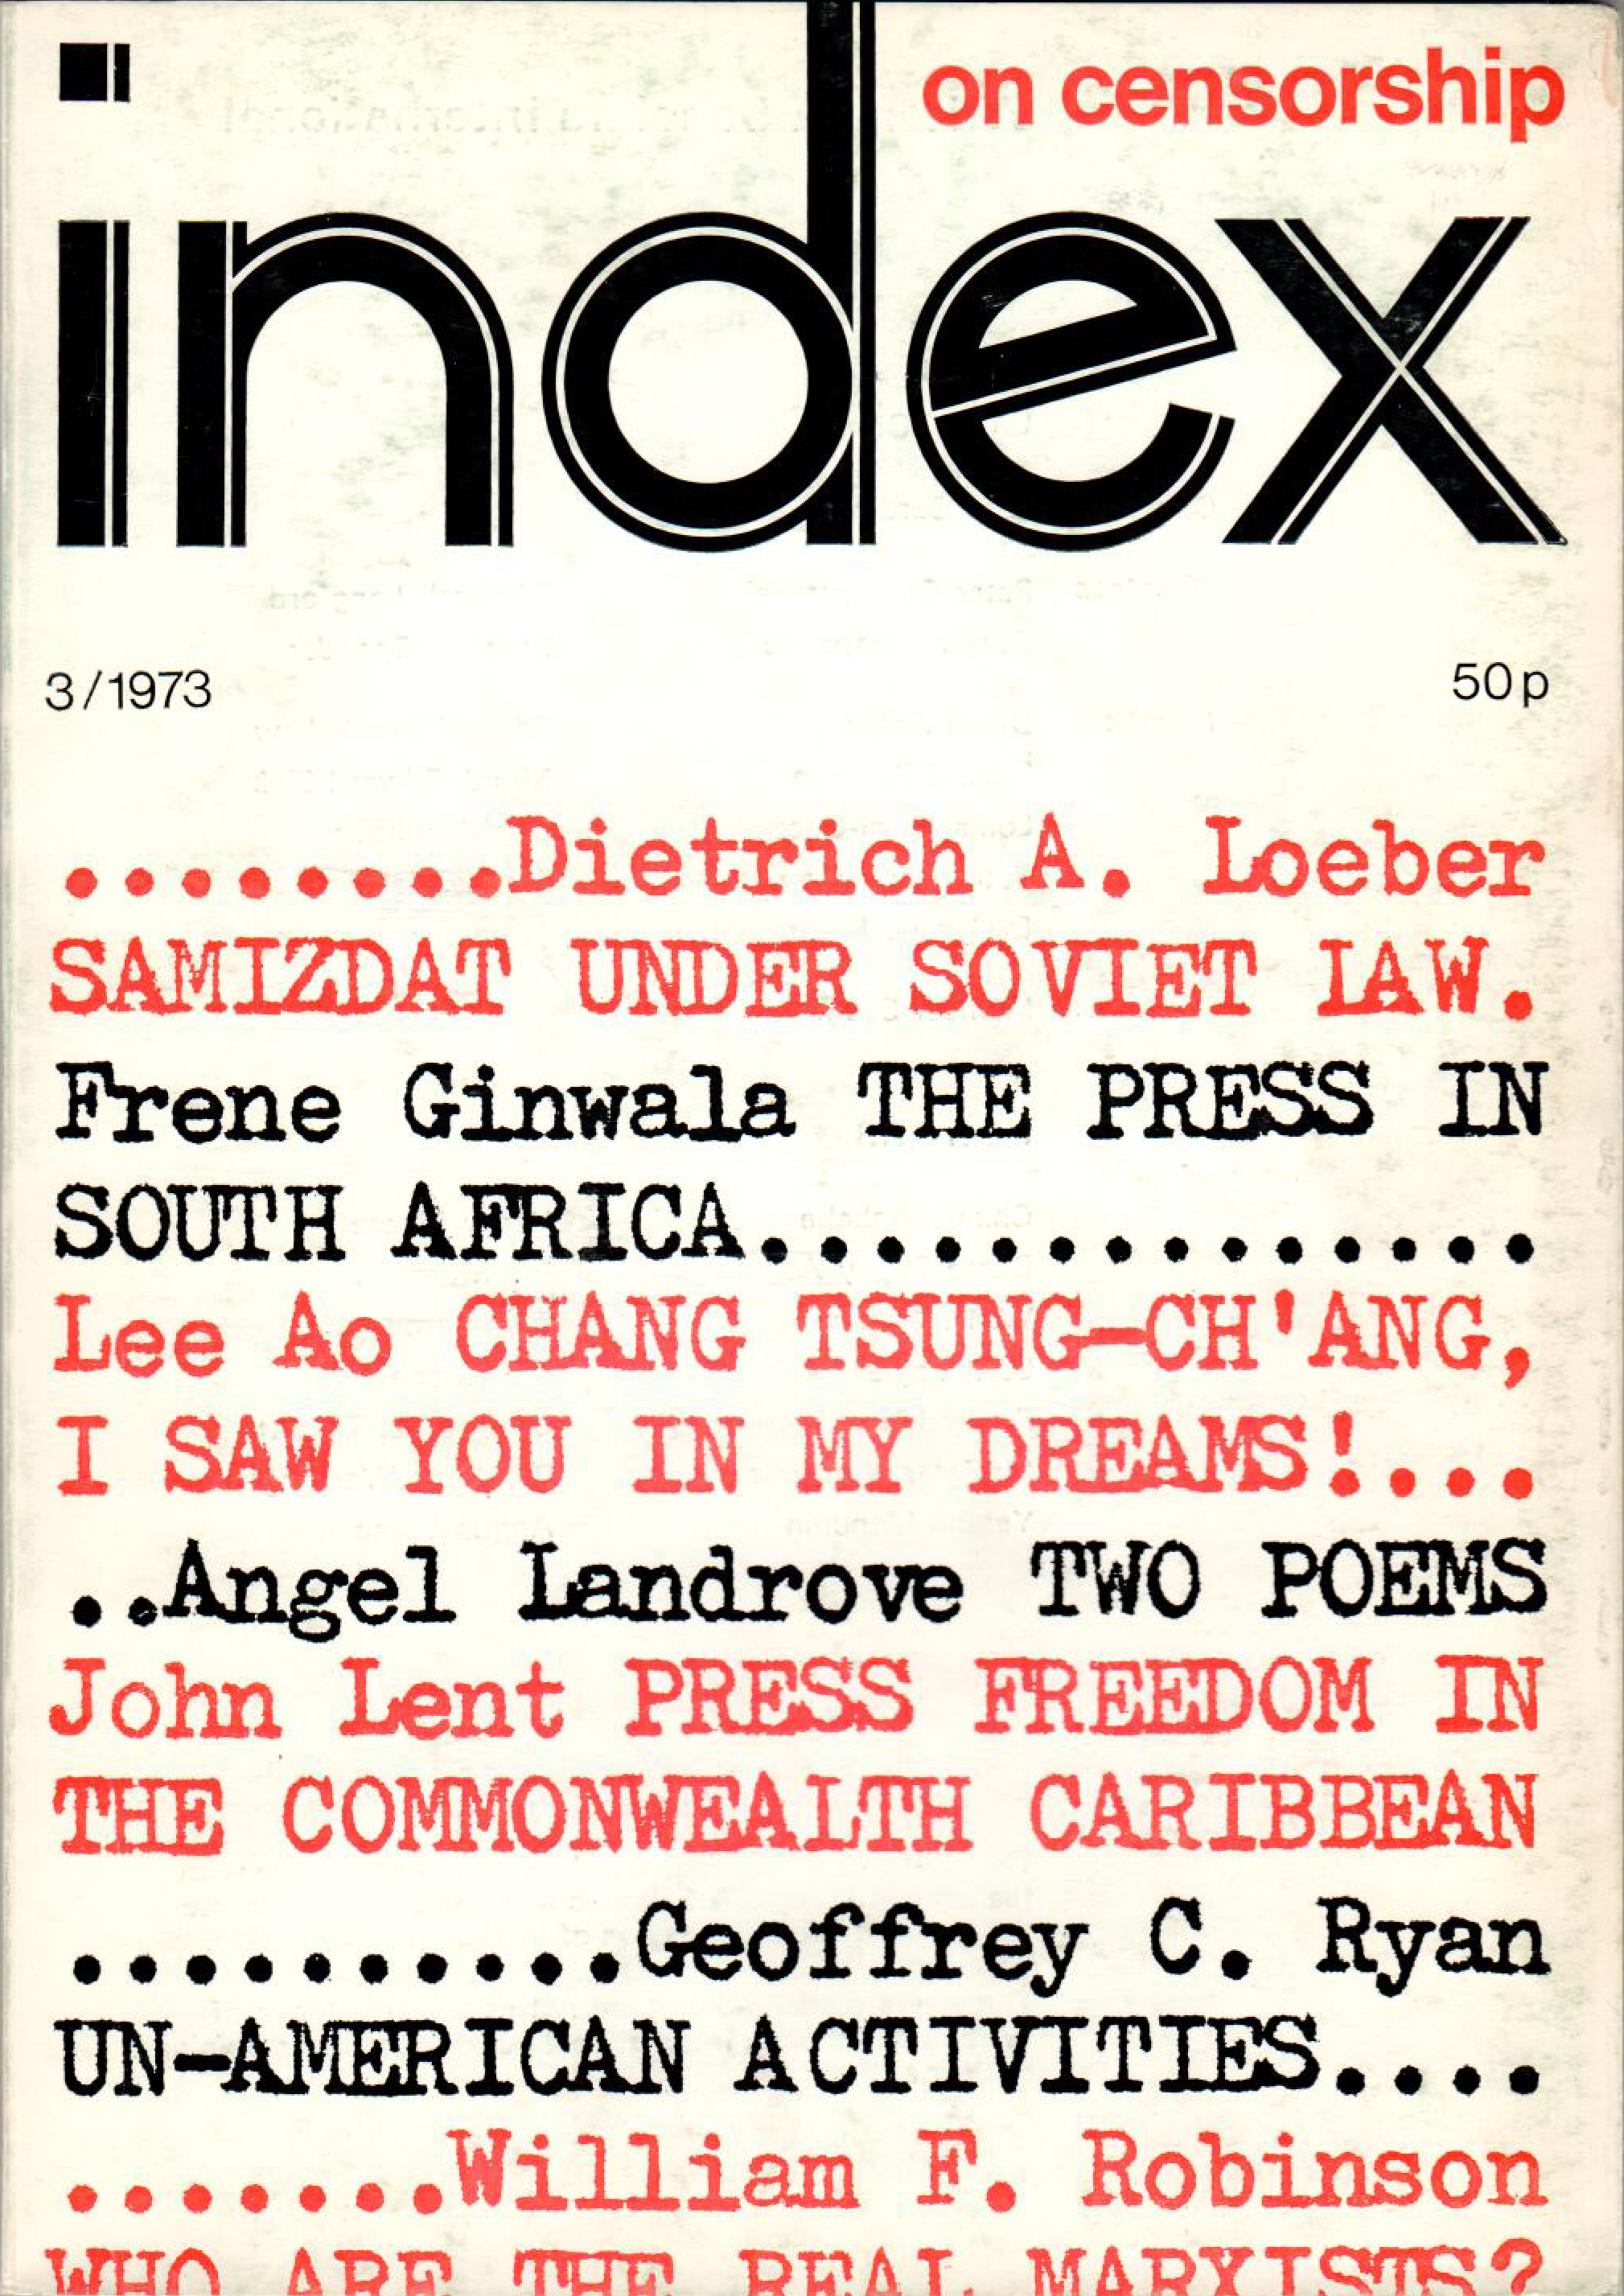 Samizdat under Soviet law, the Autumn 1973 issue of Index on Censorship magazine